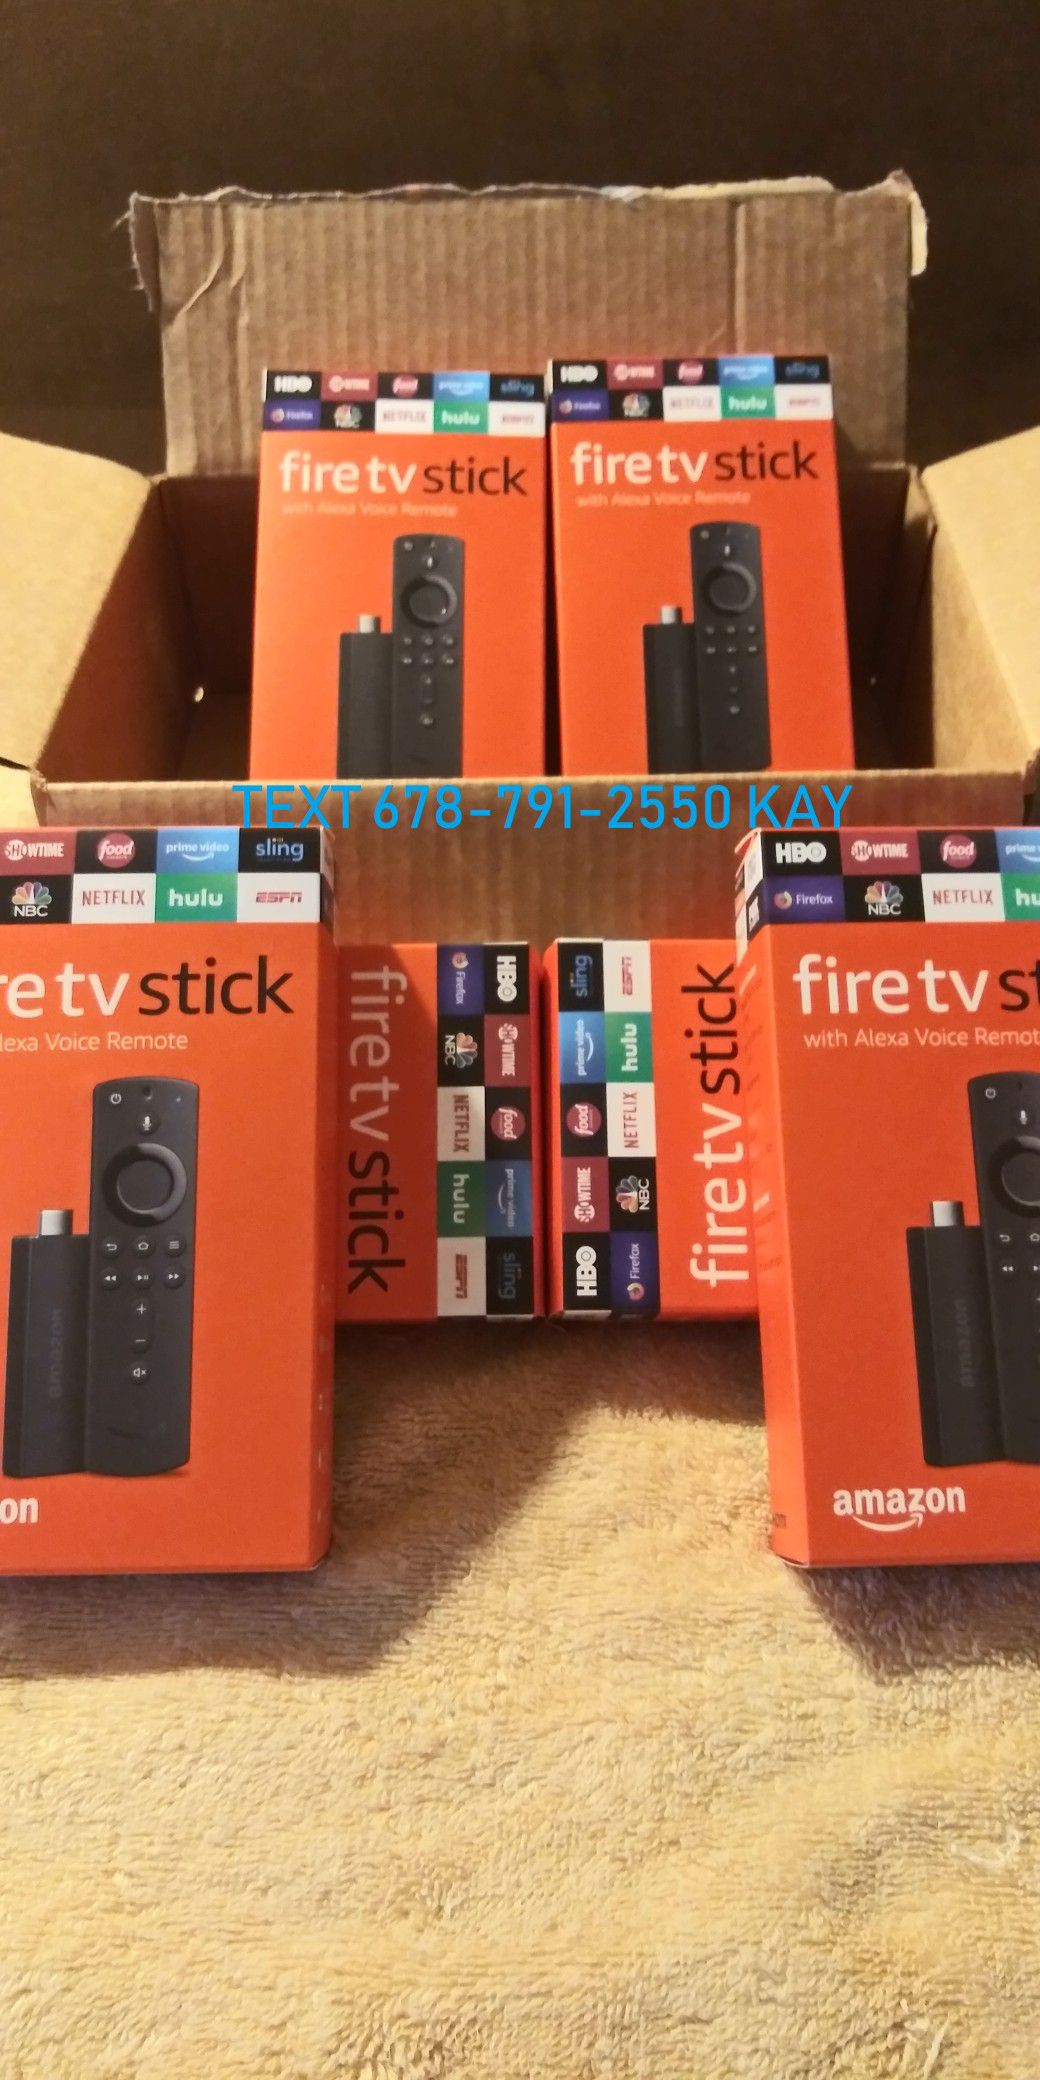 Amazon [Fire TV Stick] [Live TV streaming]